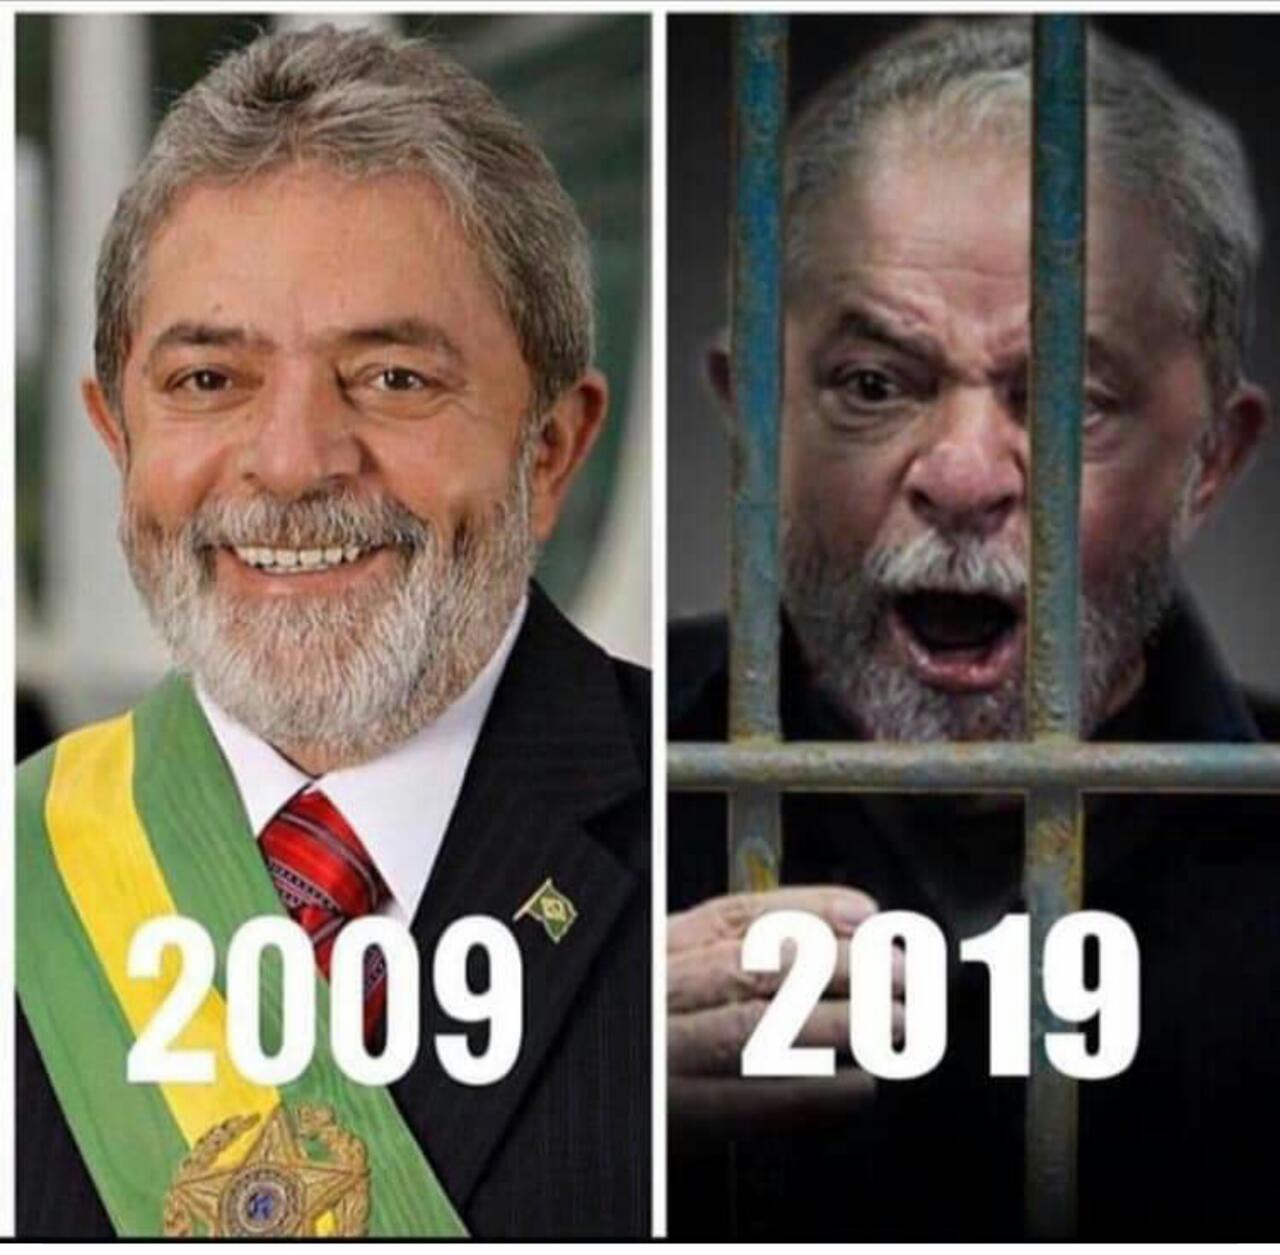 #10yearschallenge: Foto de Lula presidente em 2009 e preso em 2019 viraliza